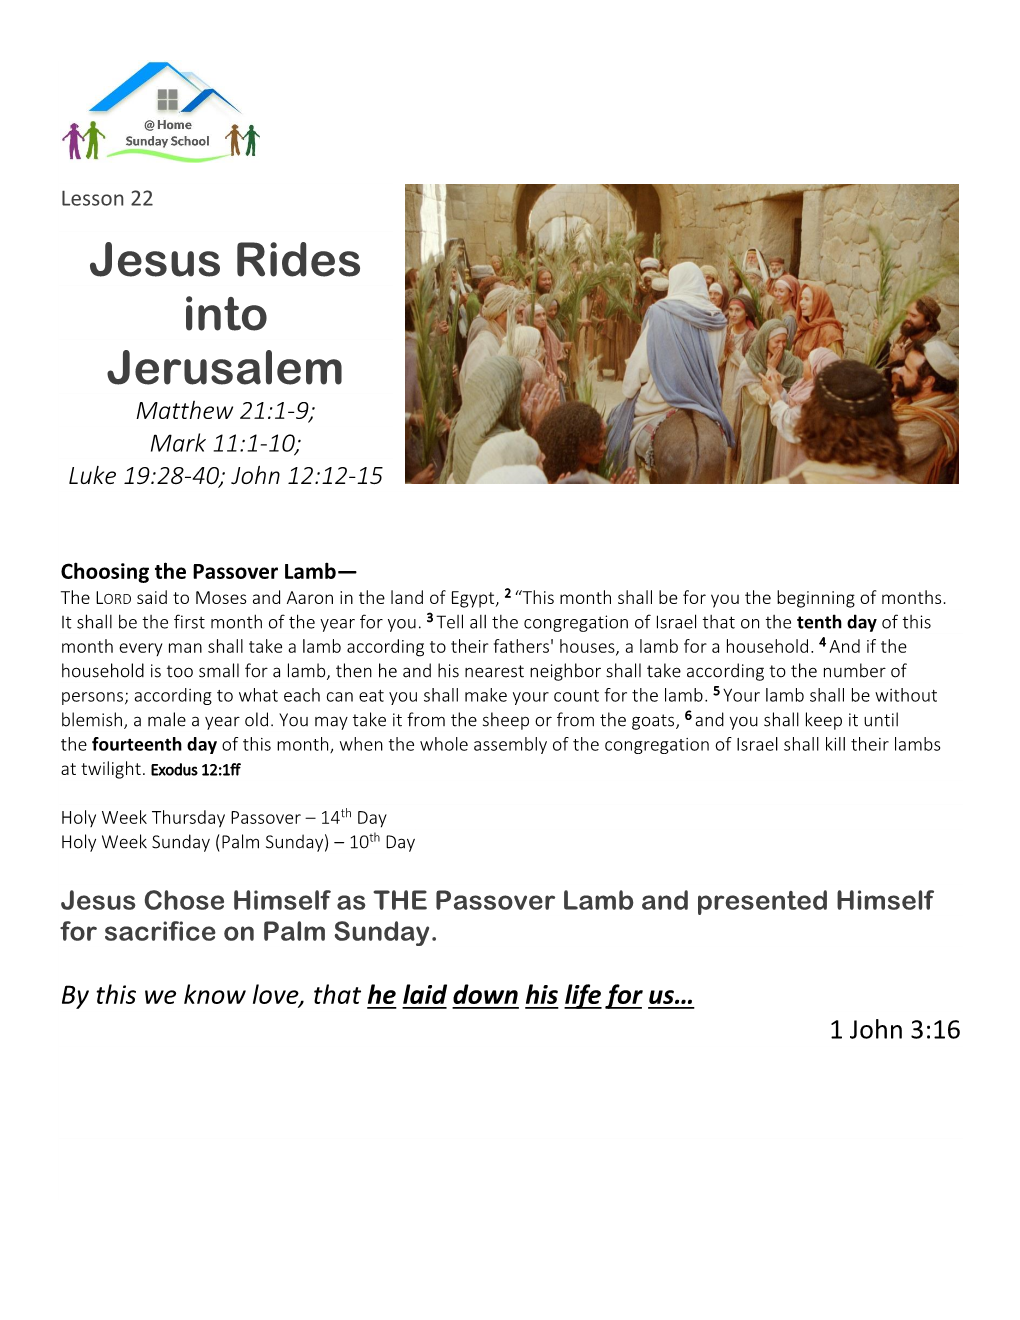 Jesus Rides Into Jerusalem Matthew 21:1-9; Mark 11:1-10; Luke 19:28-40; John 12:12-15